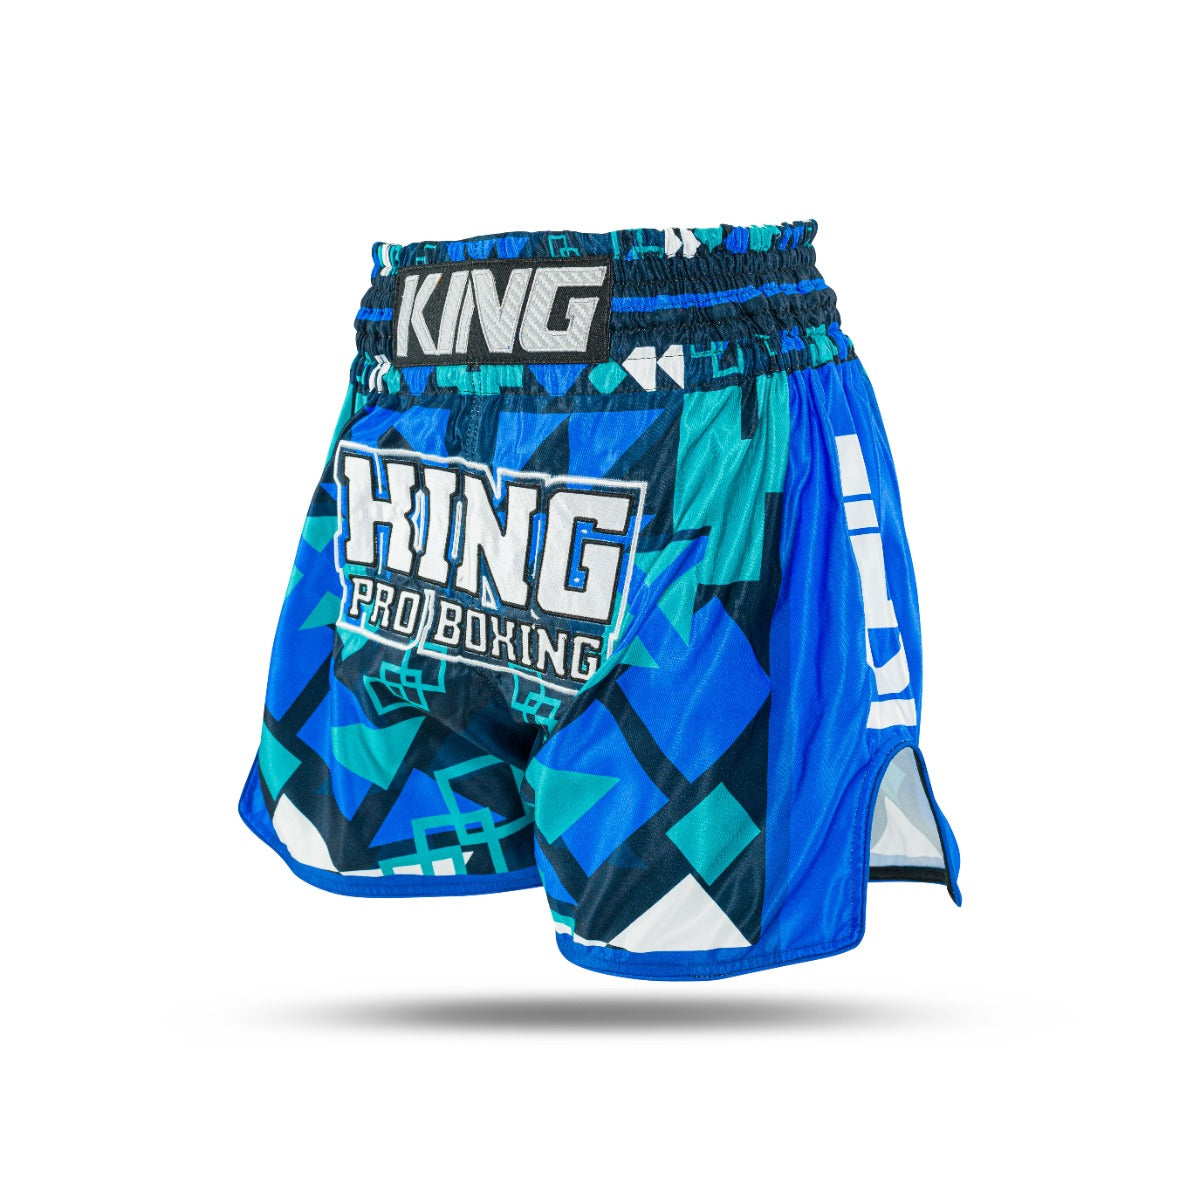 King PRO boxing muay Thai trunk - KPB ABSTRACT 1